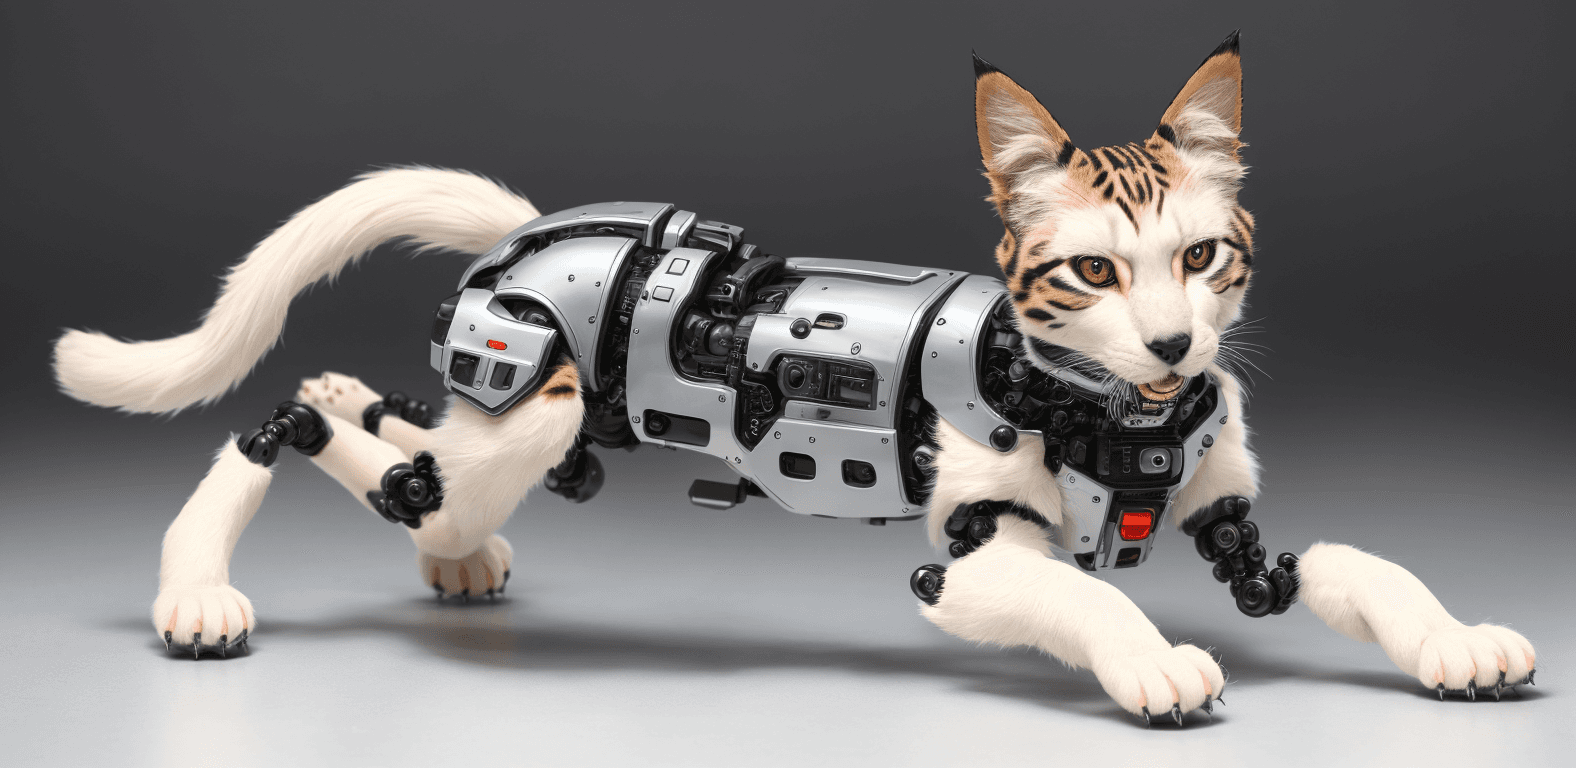 Cover Image for The Latest Phenomenon: Robotic Pets